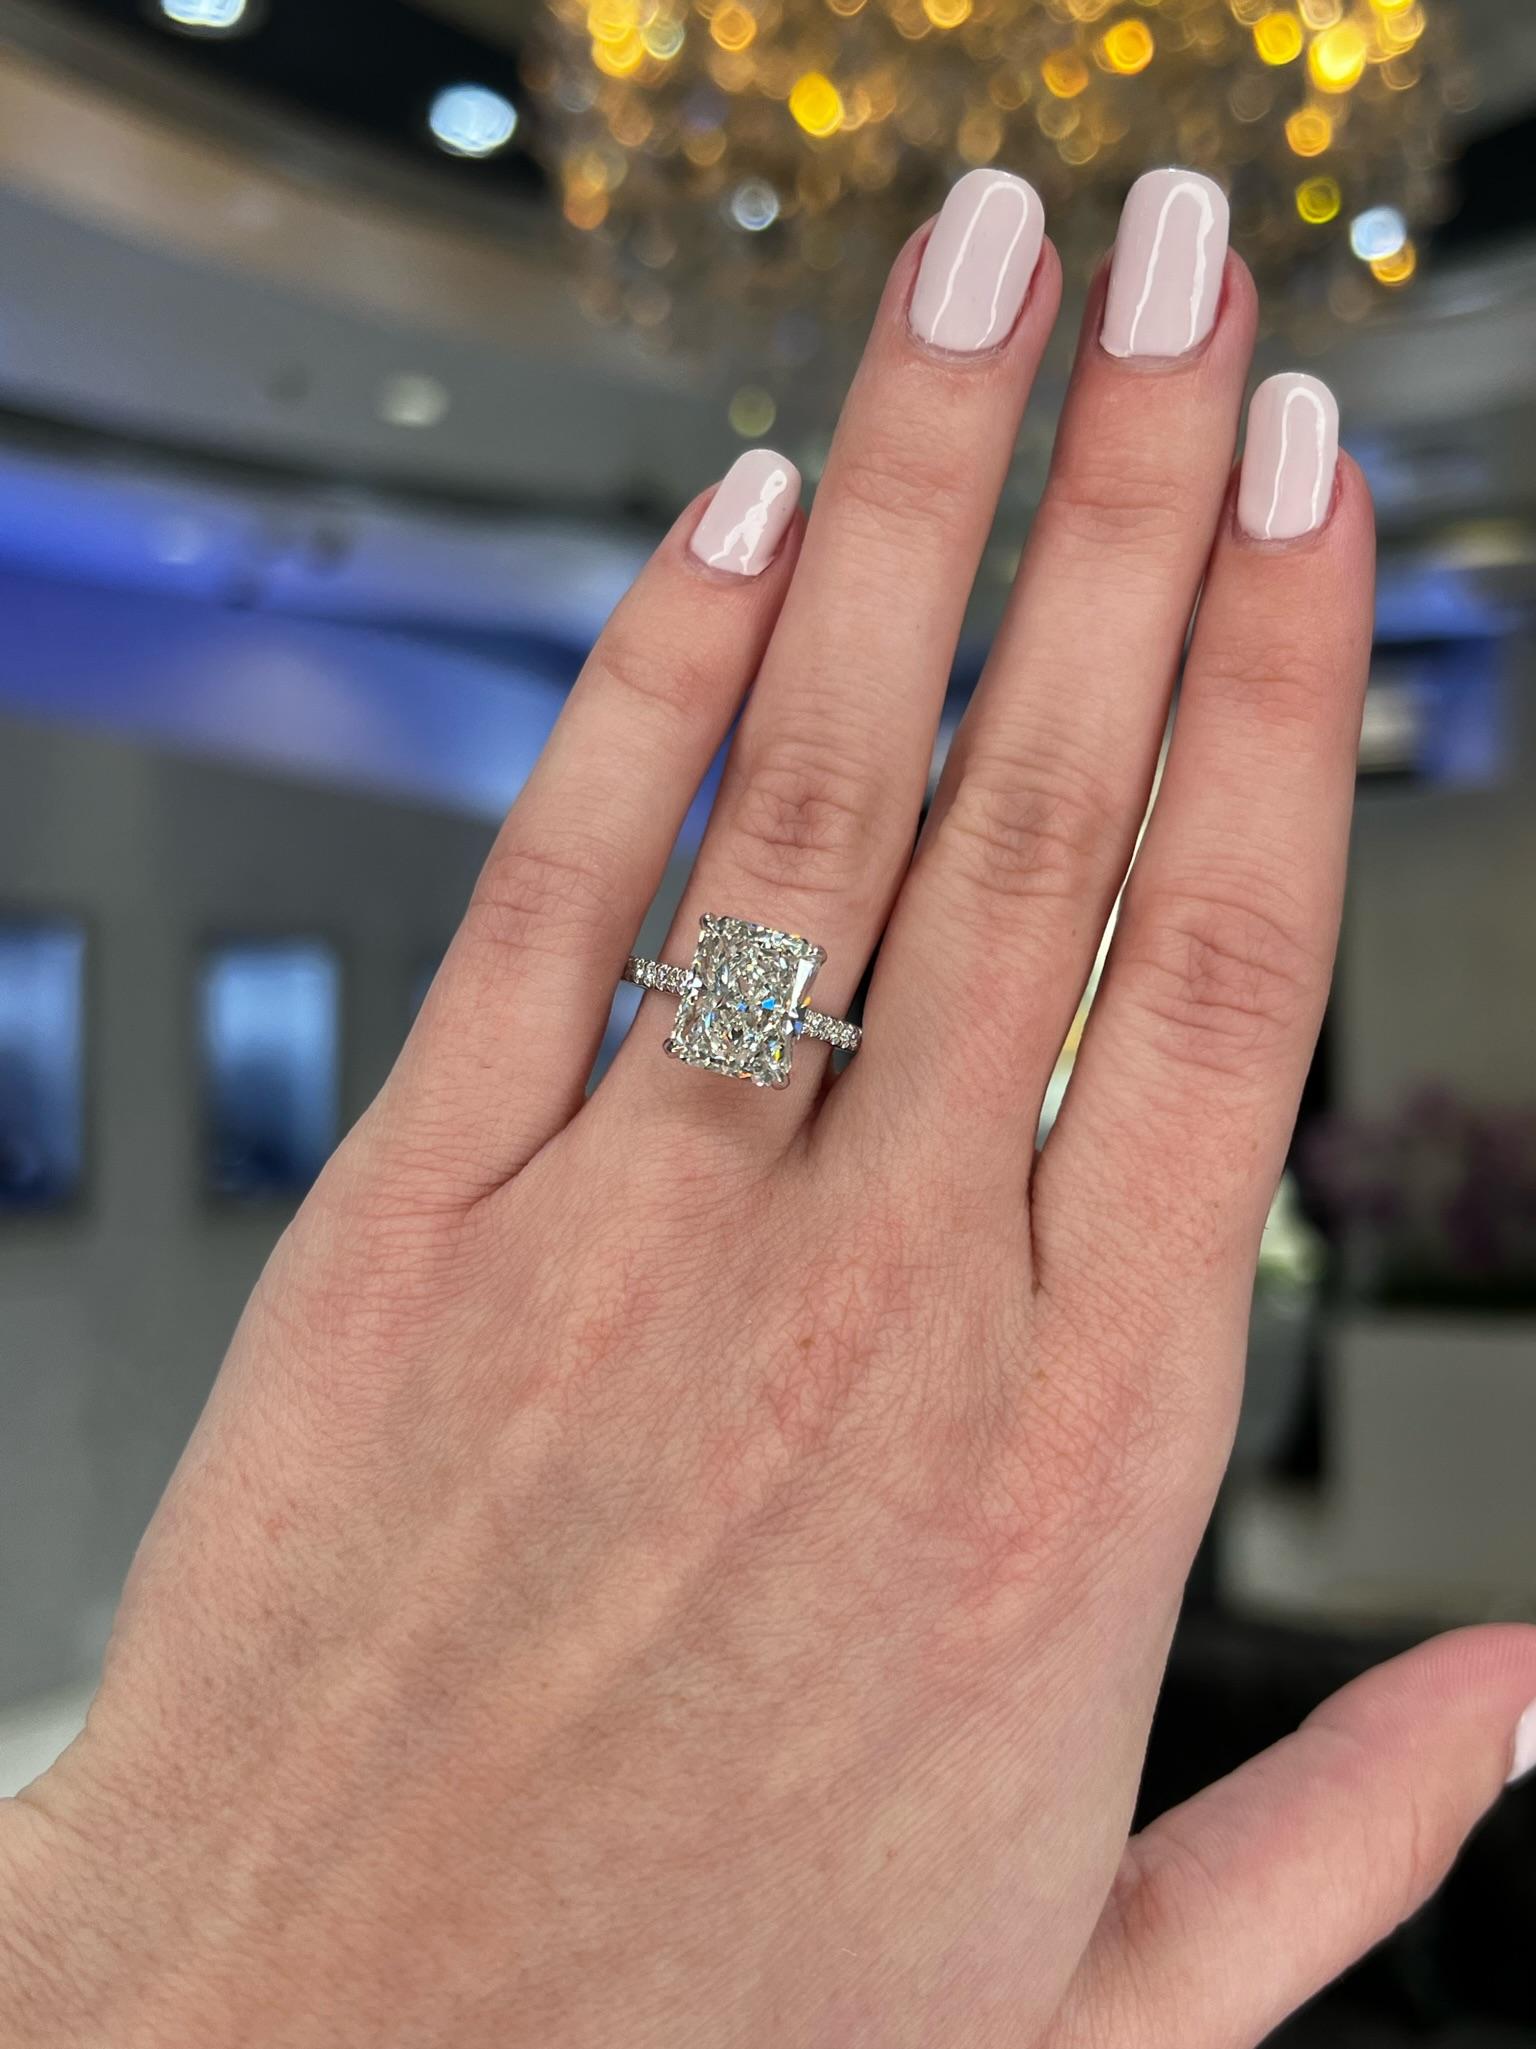 David Rosenberg 5.02 Carat Radiant Cut GIA Diamond Wedding Engagement Ring For Sale 5